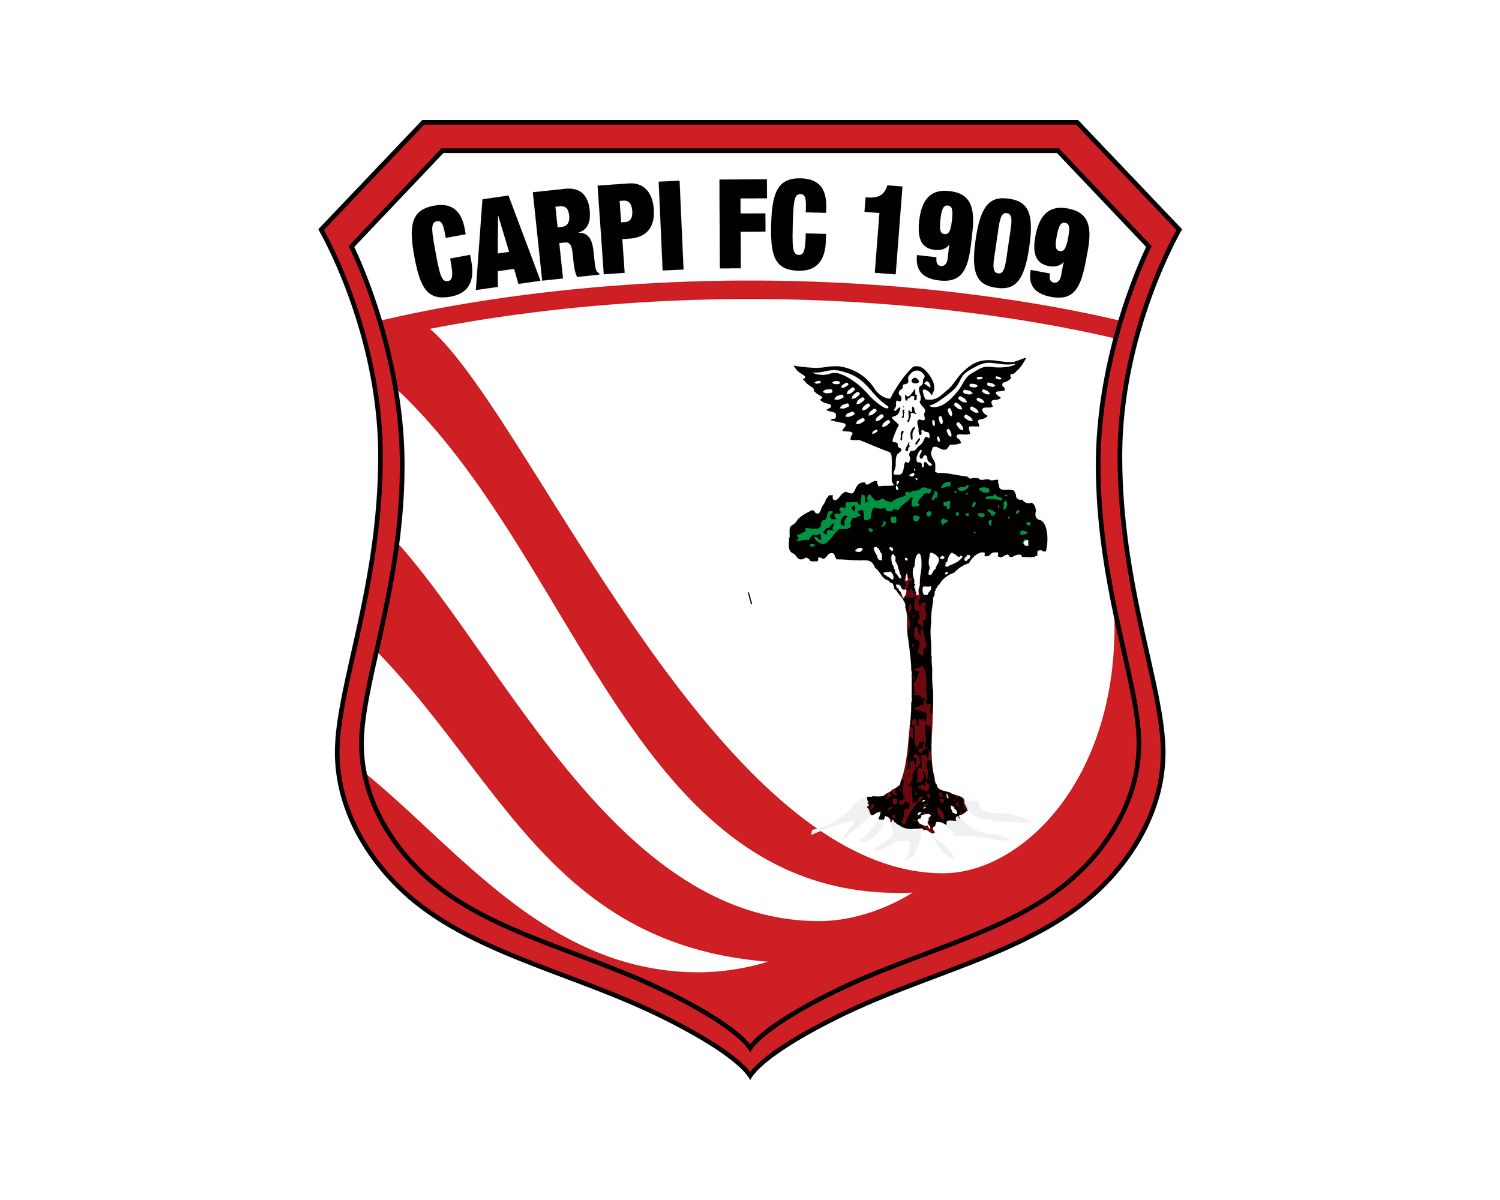 carpi-fc-1909-16-football-club-facts